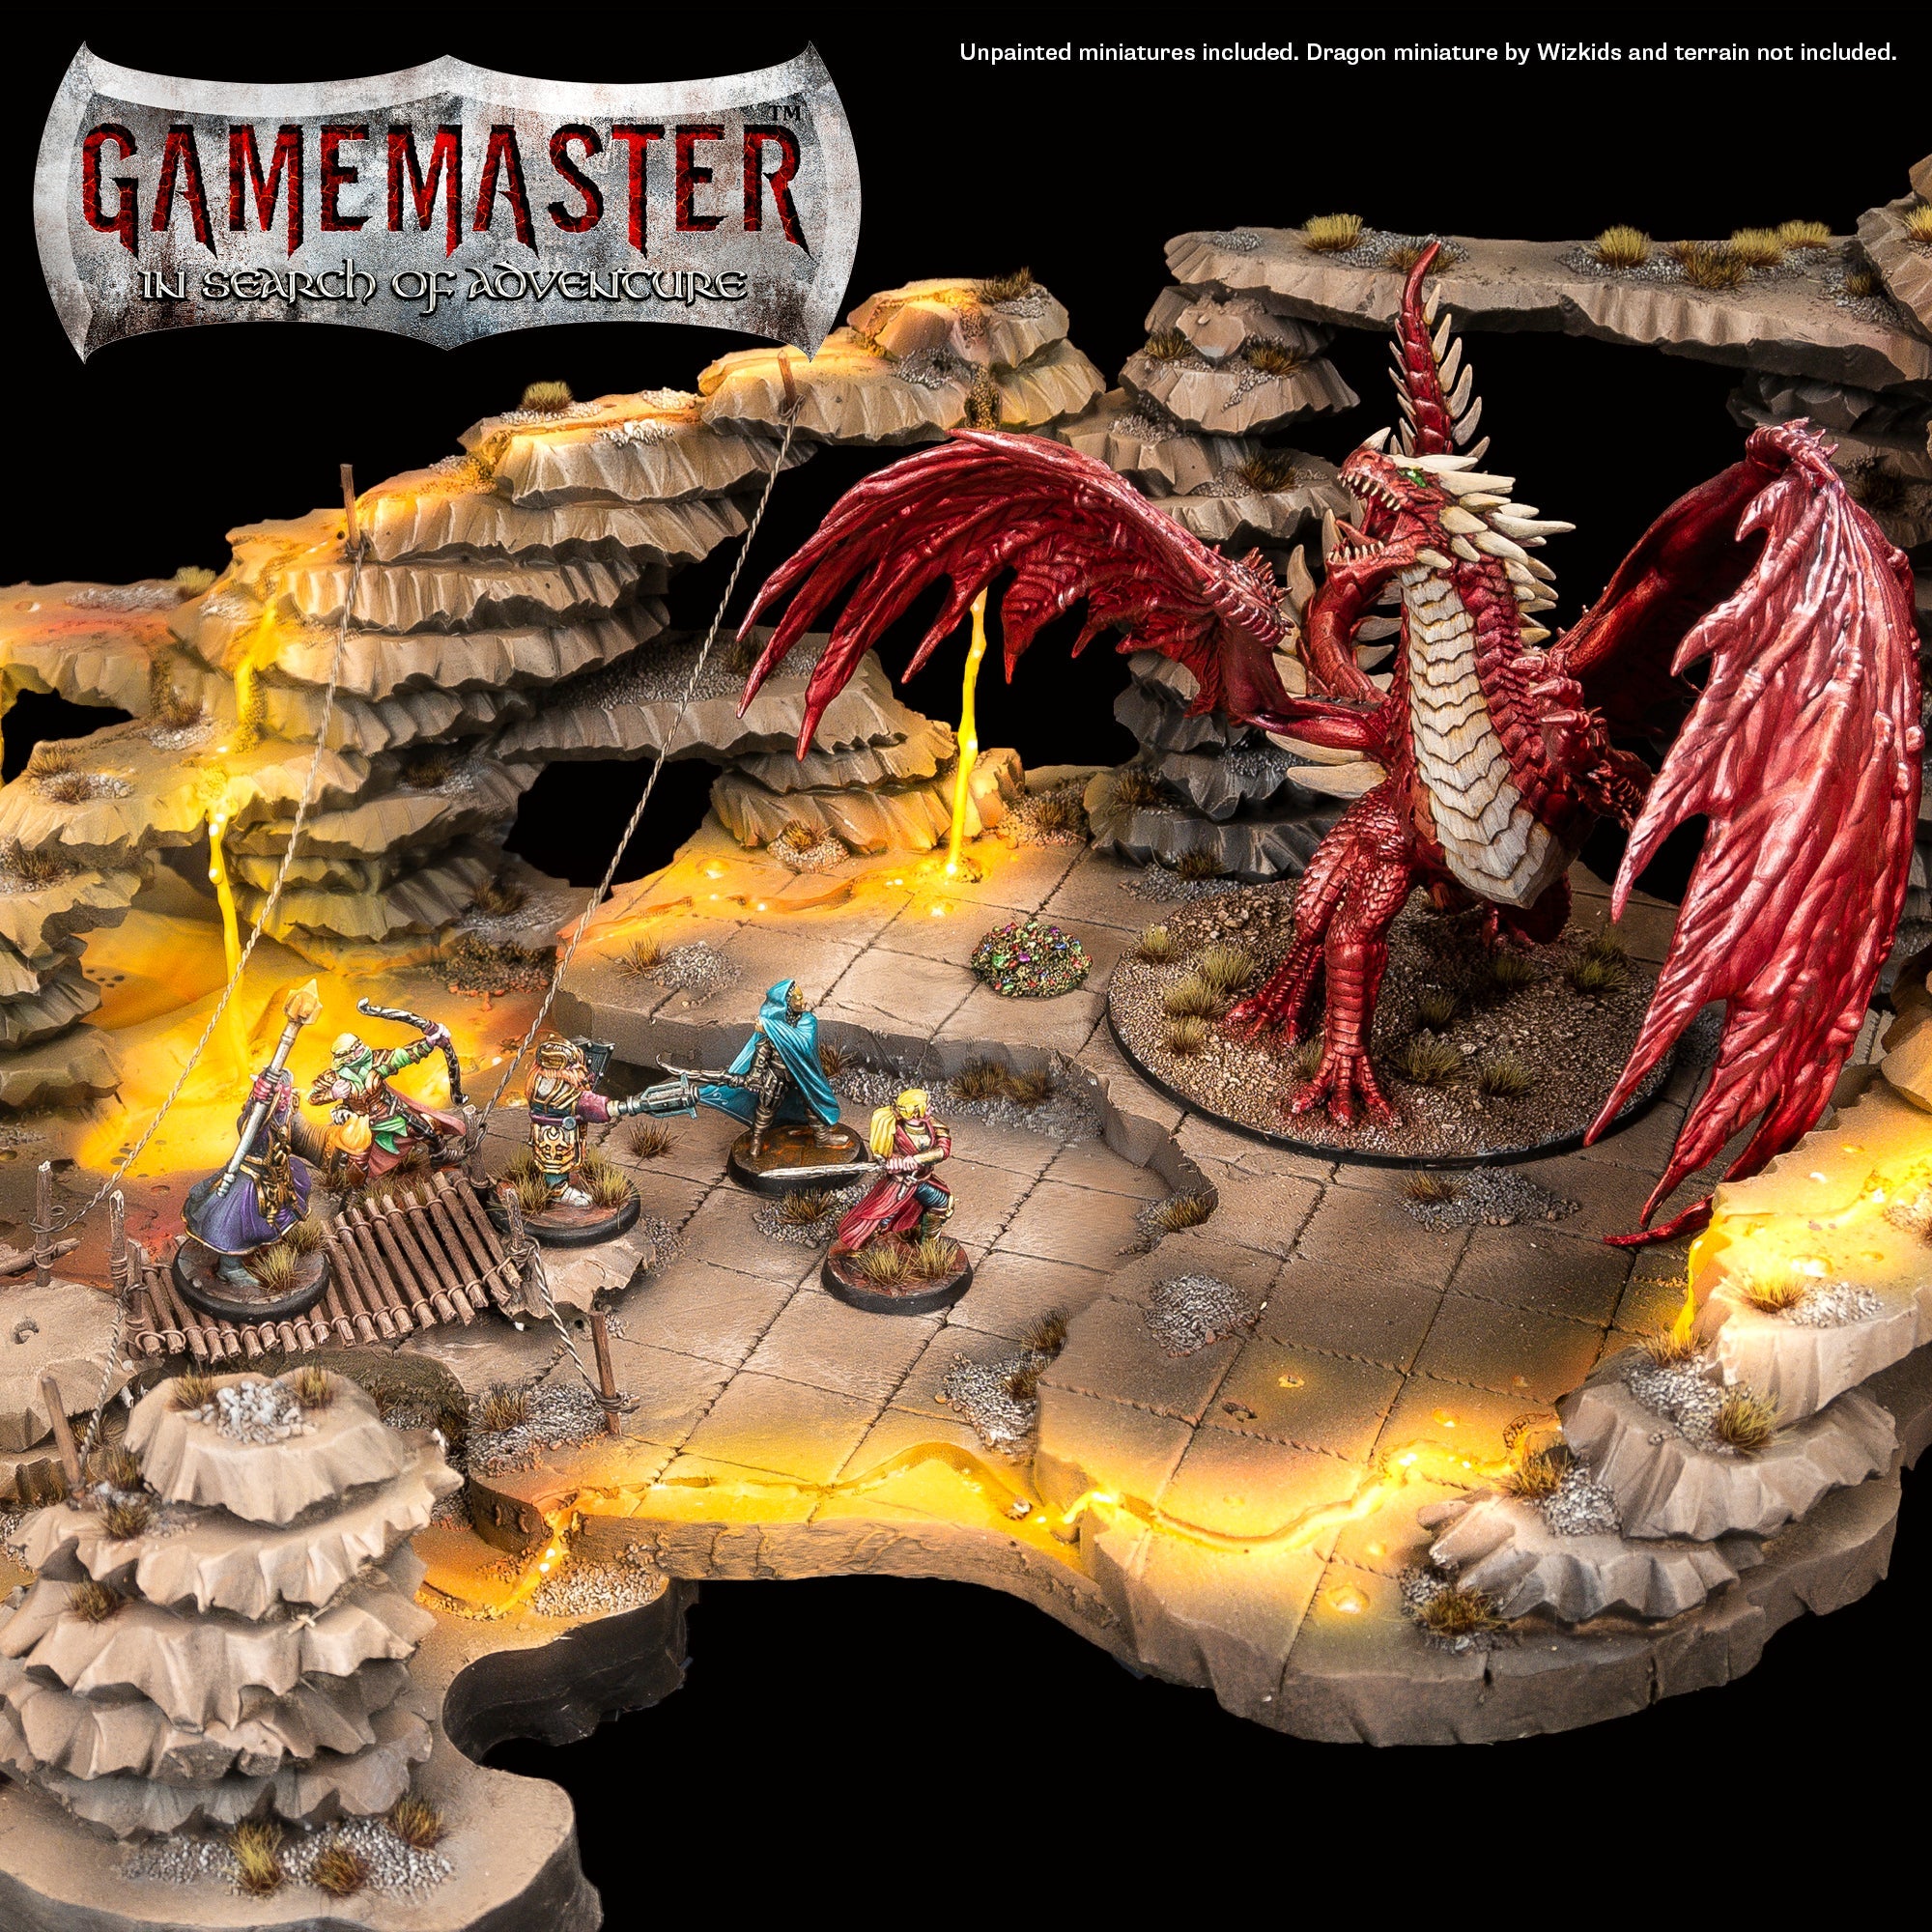 GameMaster: Adventure Starter Role-playing Paint Set Combo